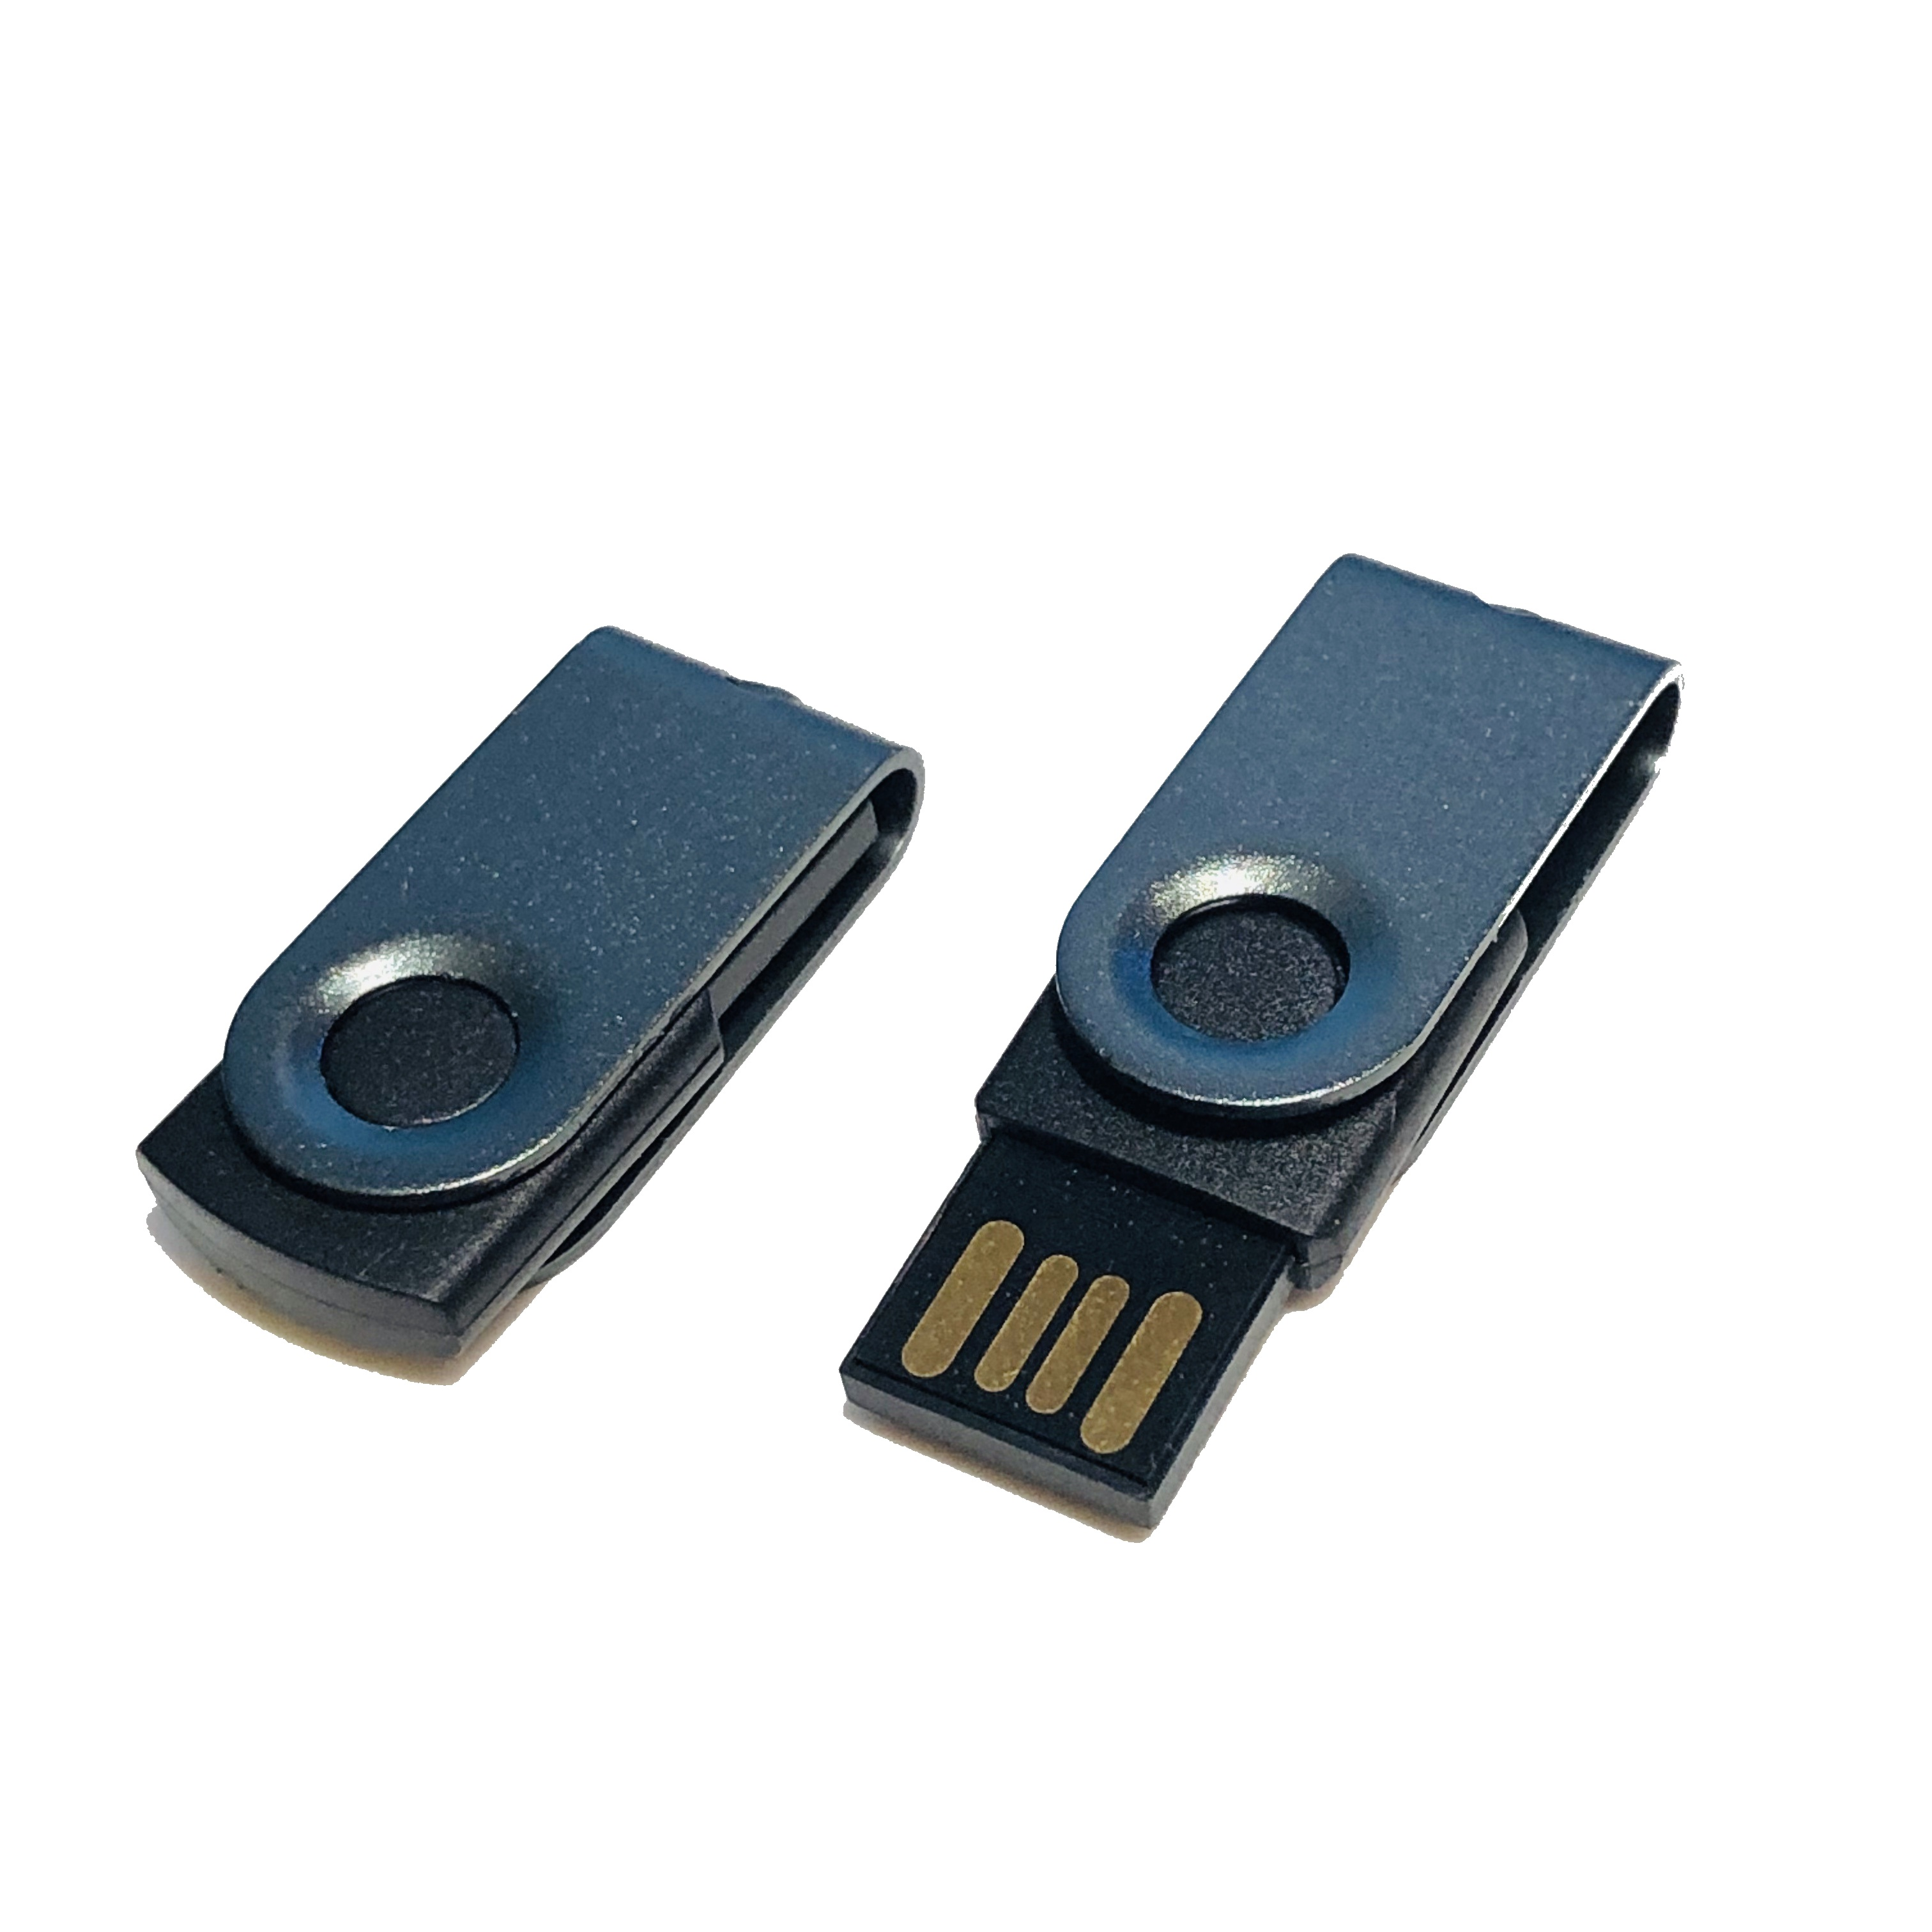 USB GERMANY ® USB-Stick (Schwarz-Graumetall, MINI-SWIVEL 1 GB)